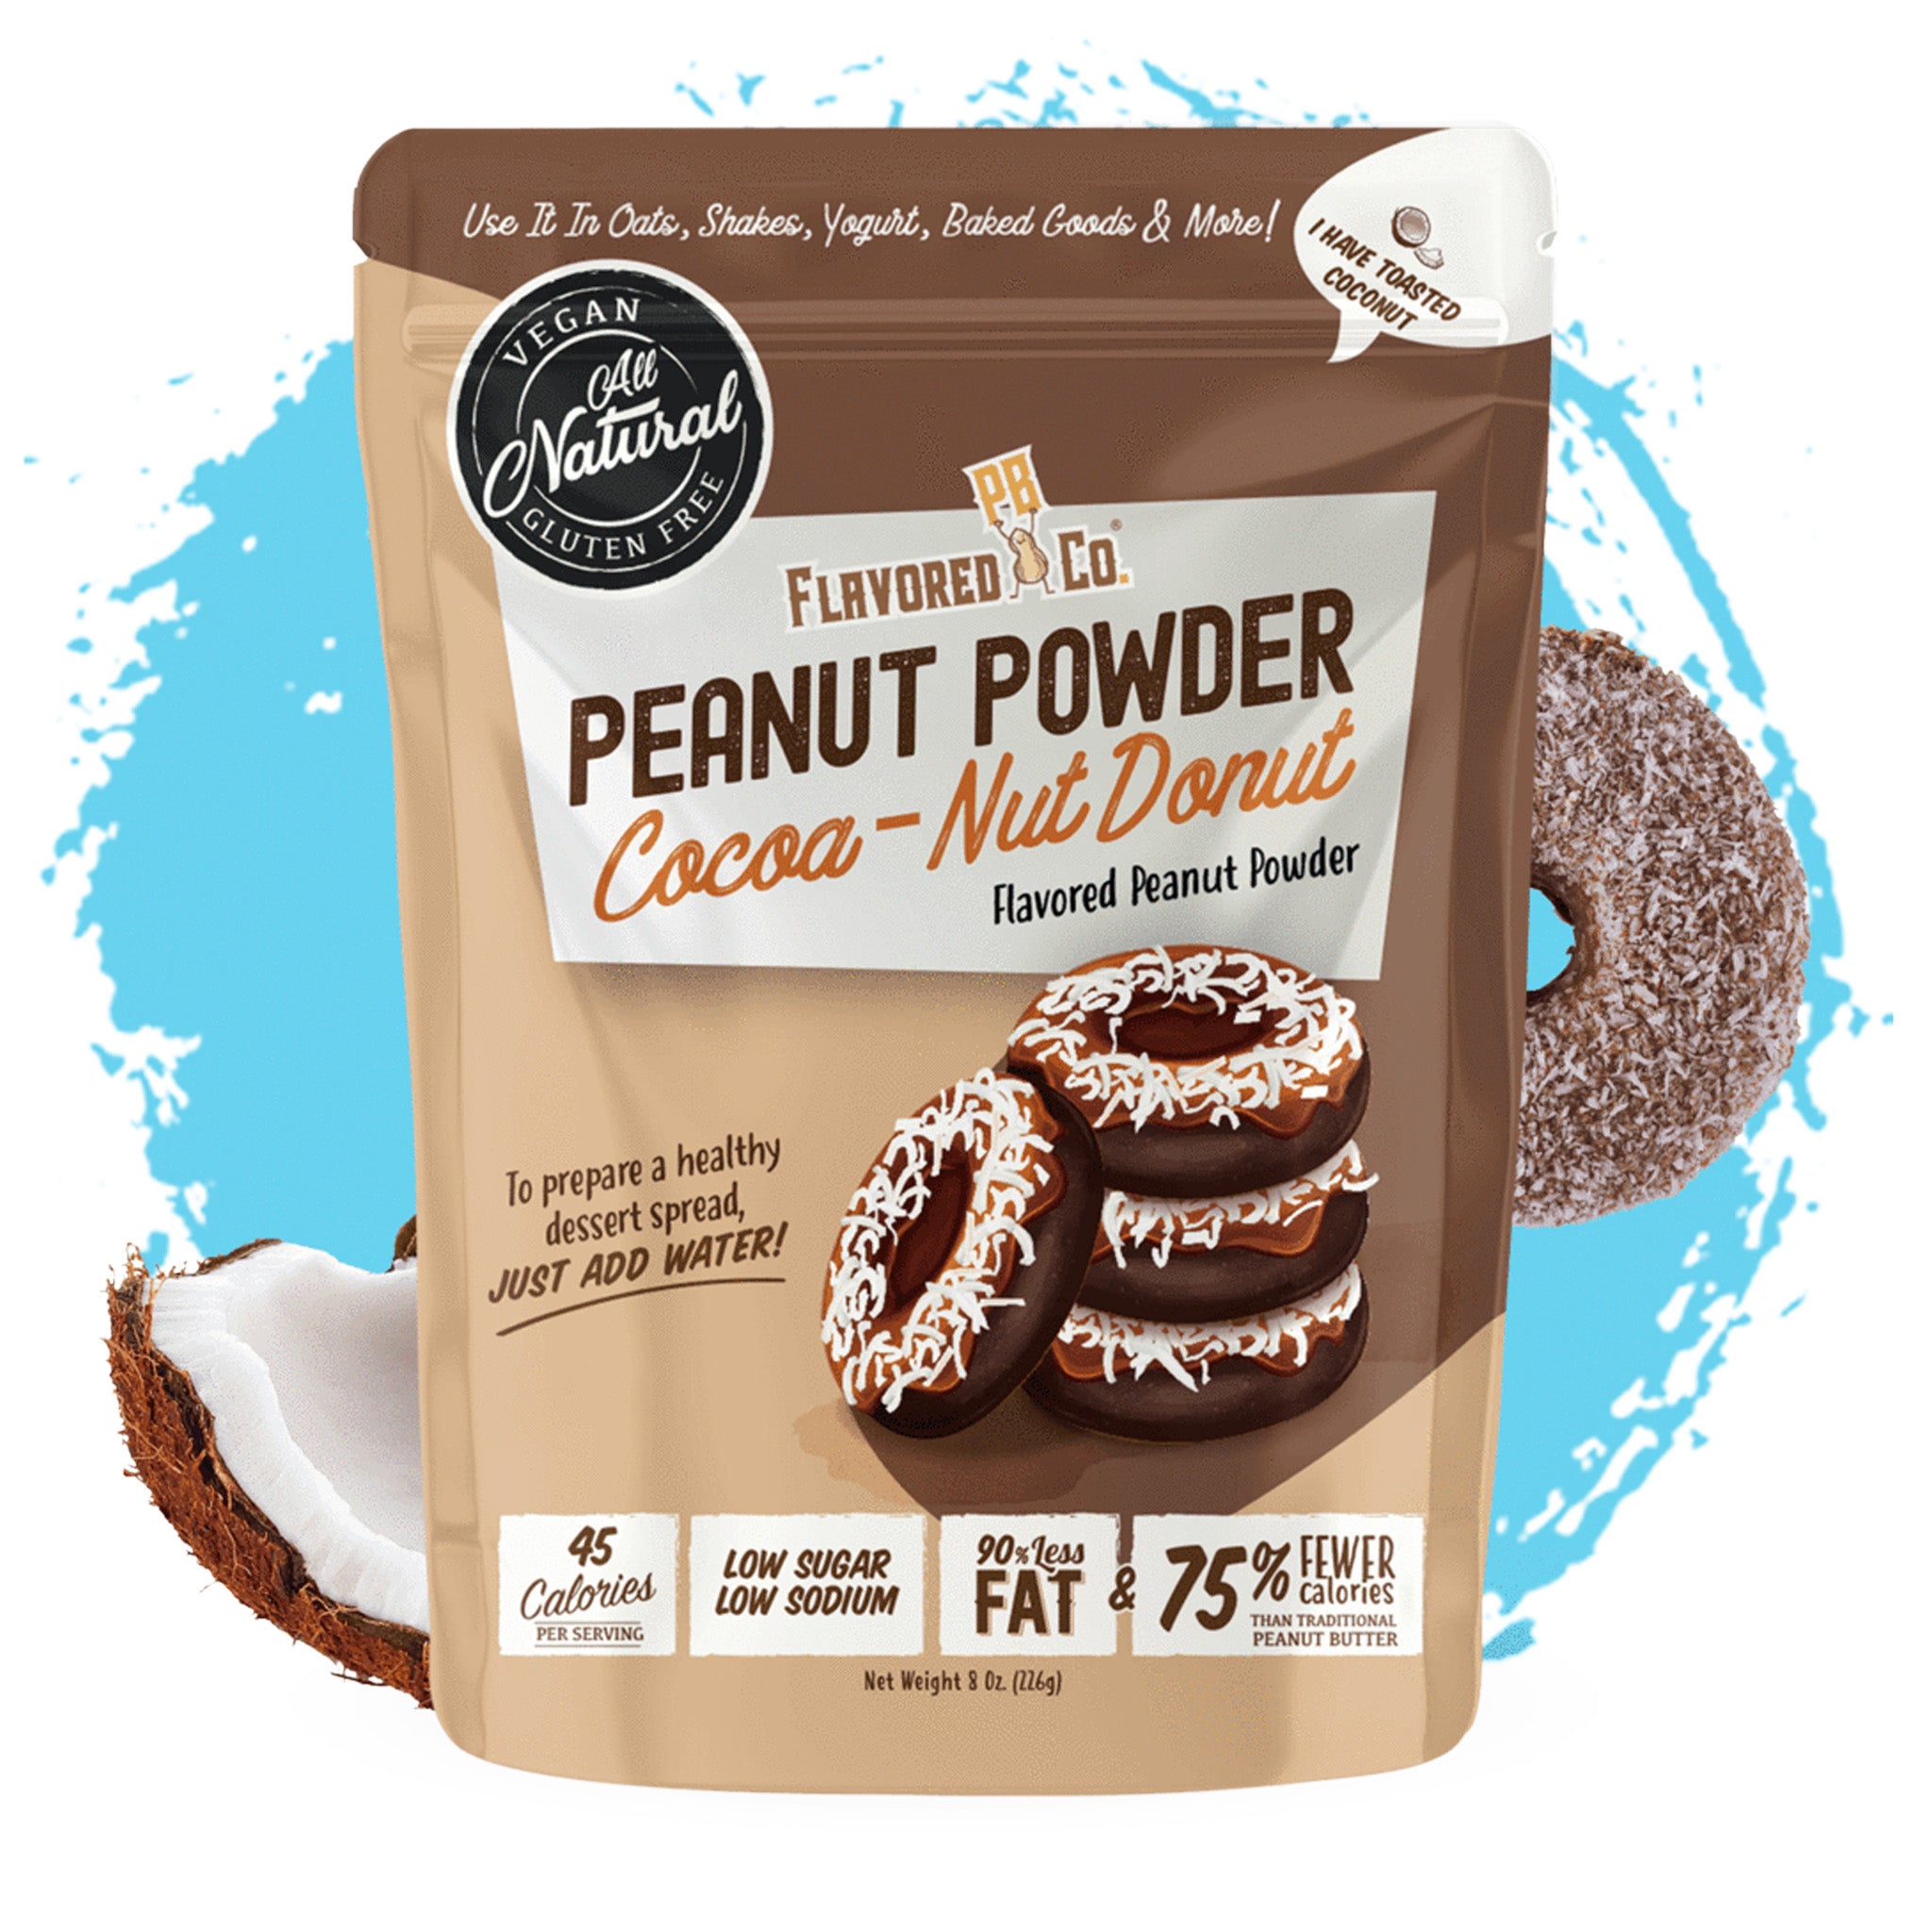 Cocoa-Nut Donut Peanut Butter Powder (226g)